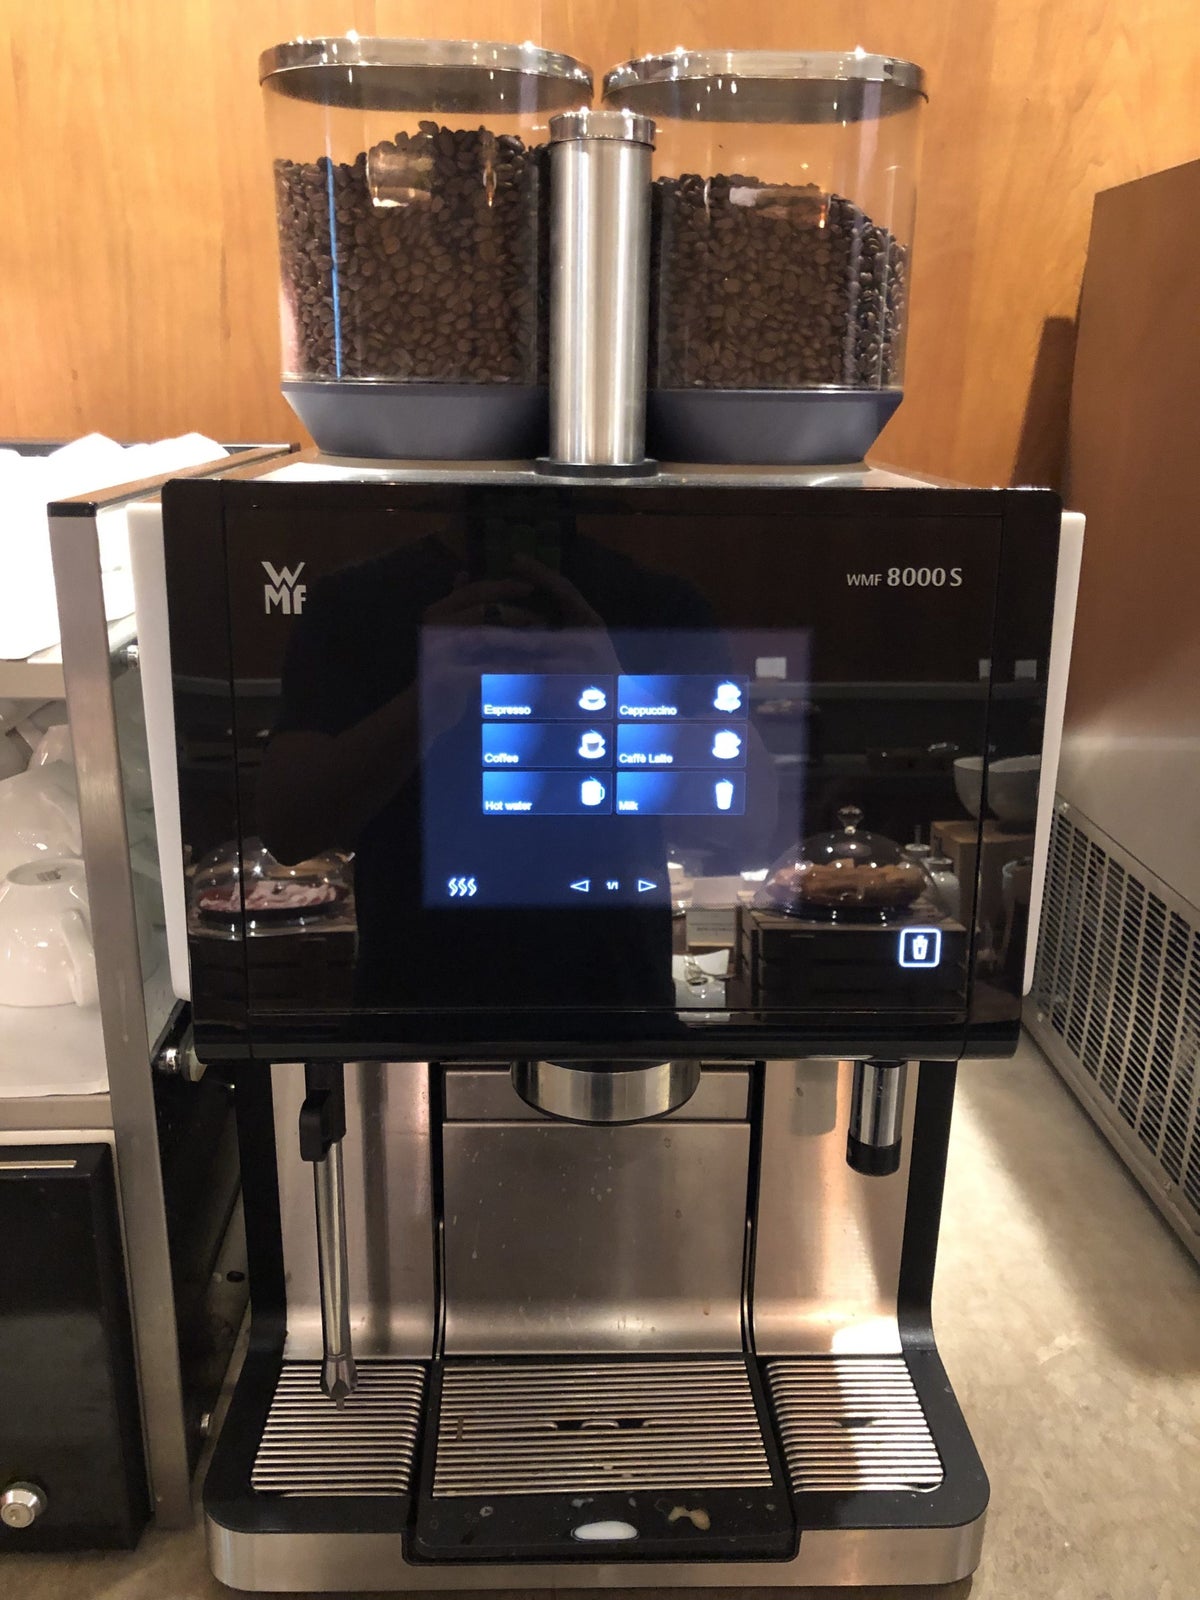 The Pier, First at Hong Kong International Airport espresso machine